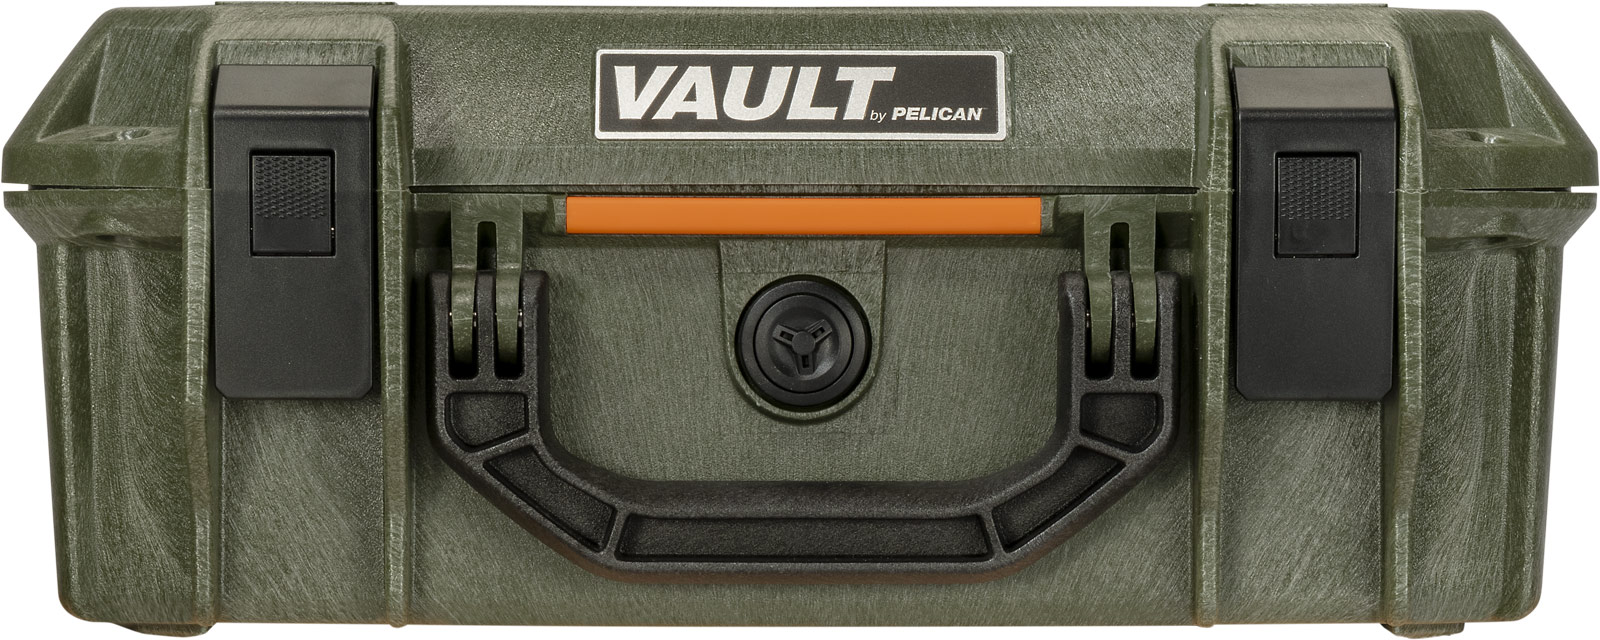 pelican vault v200 od green closed case